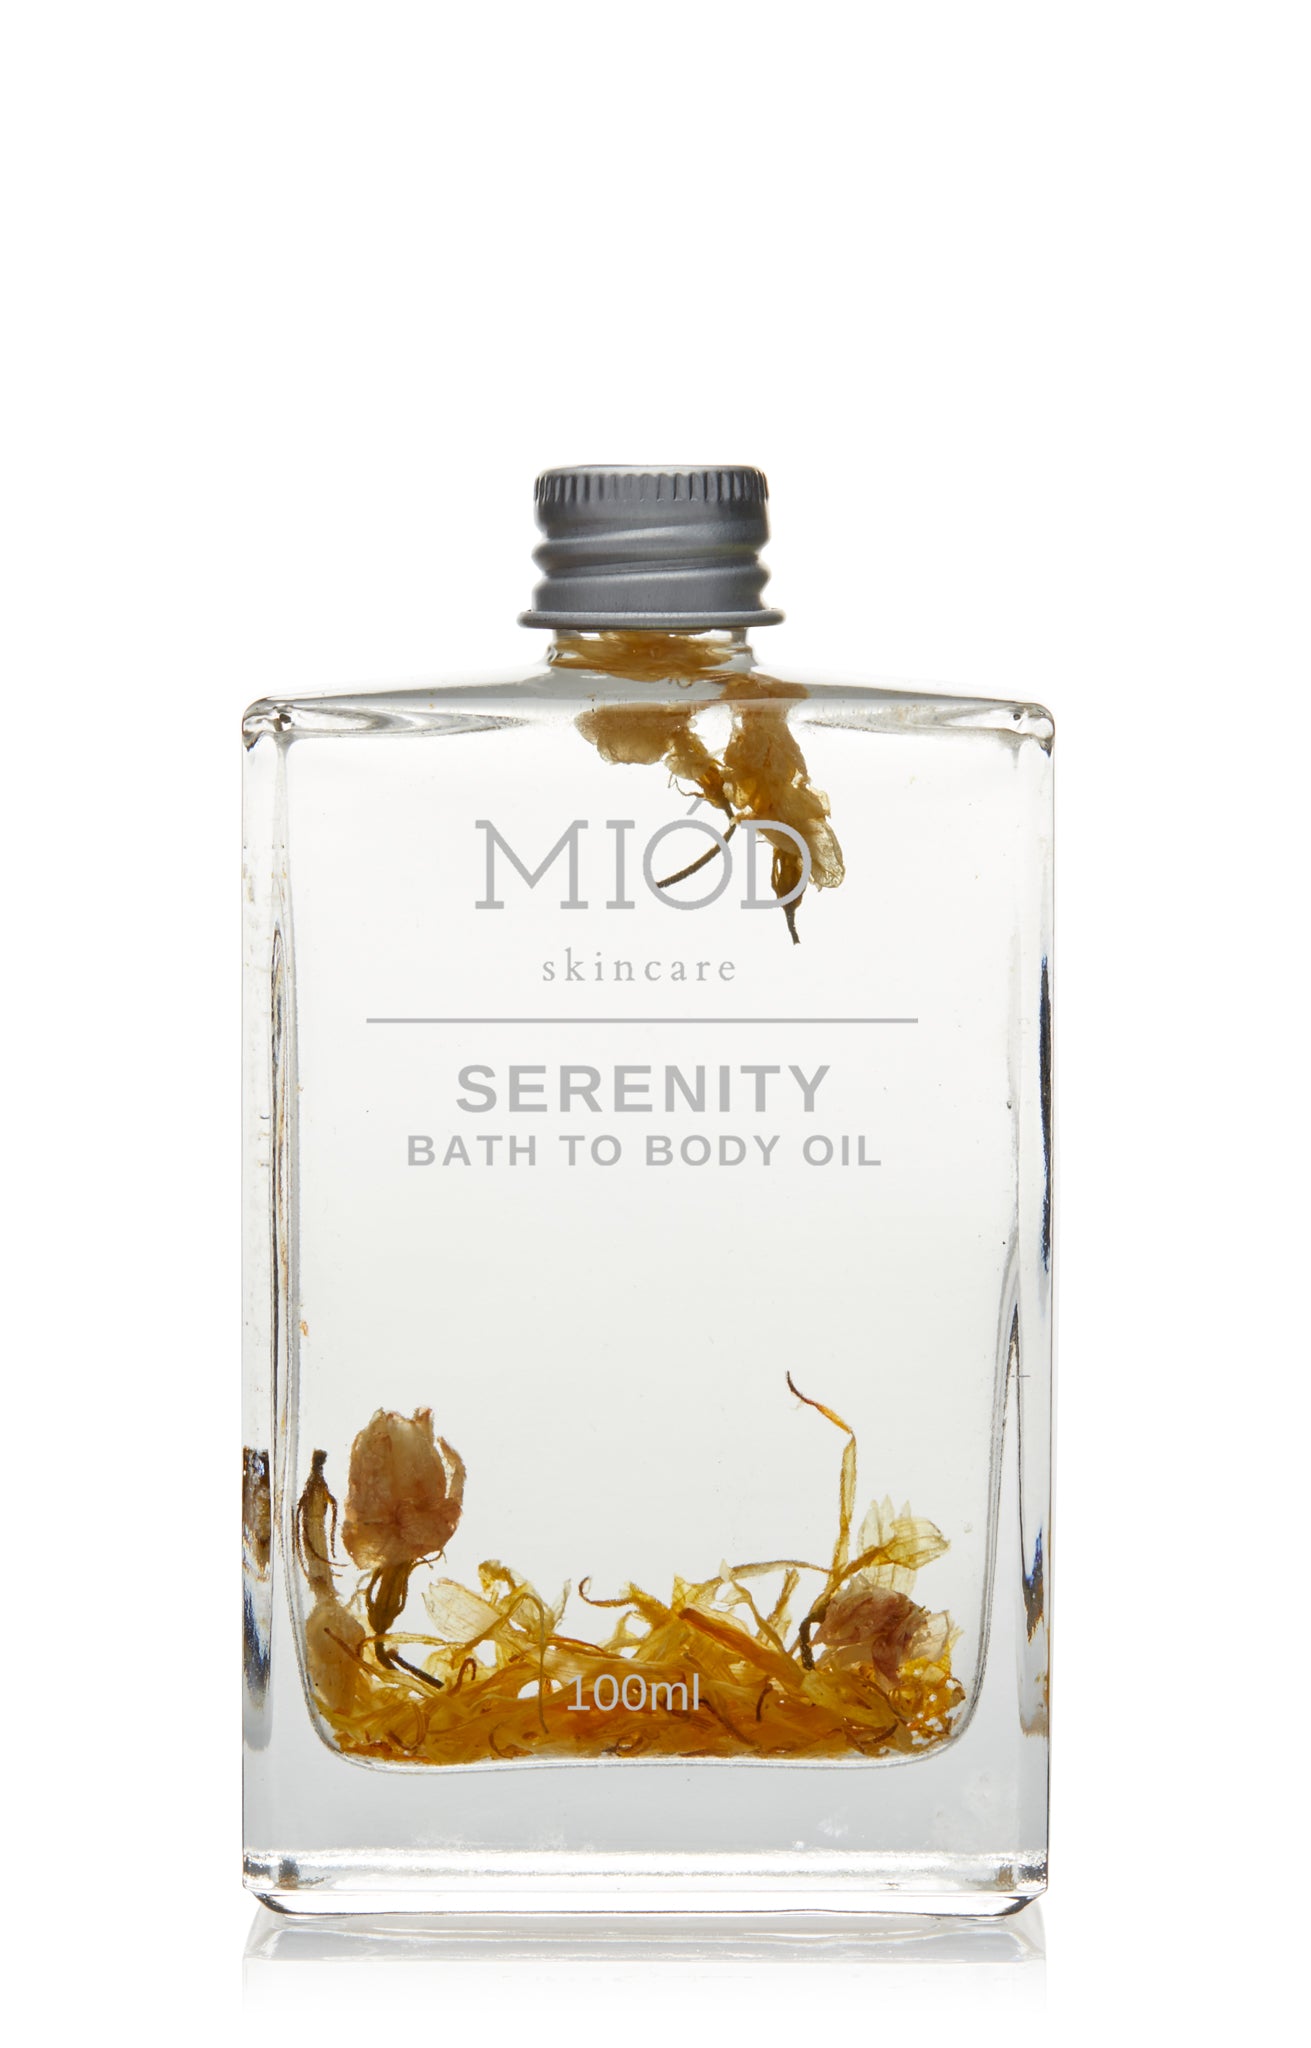 Serenity Bath to Body Oil